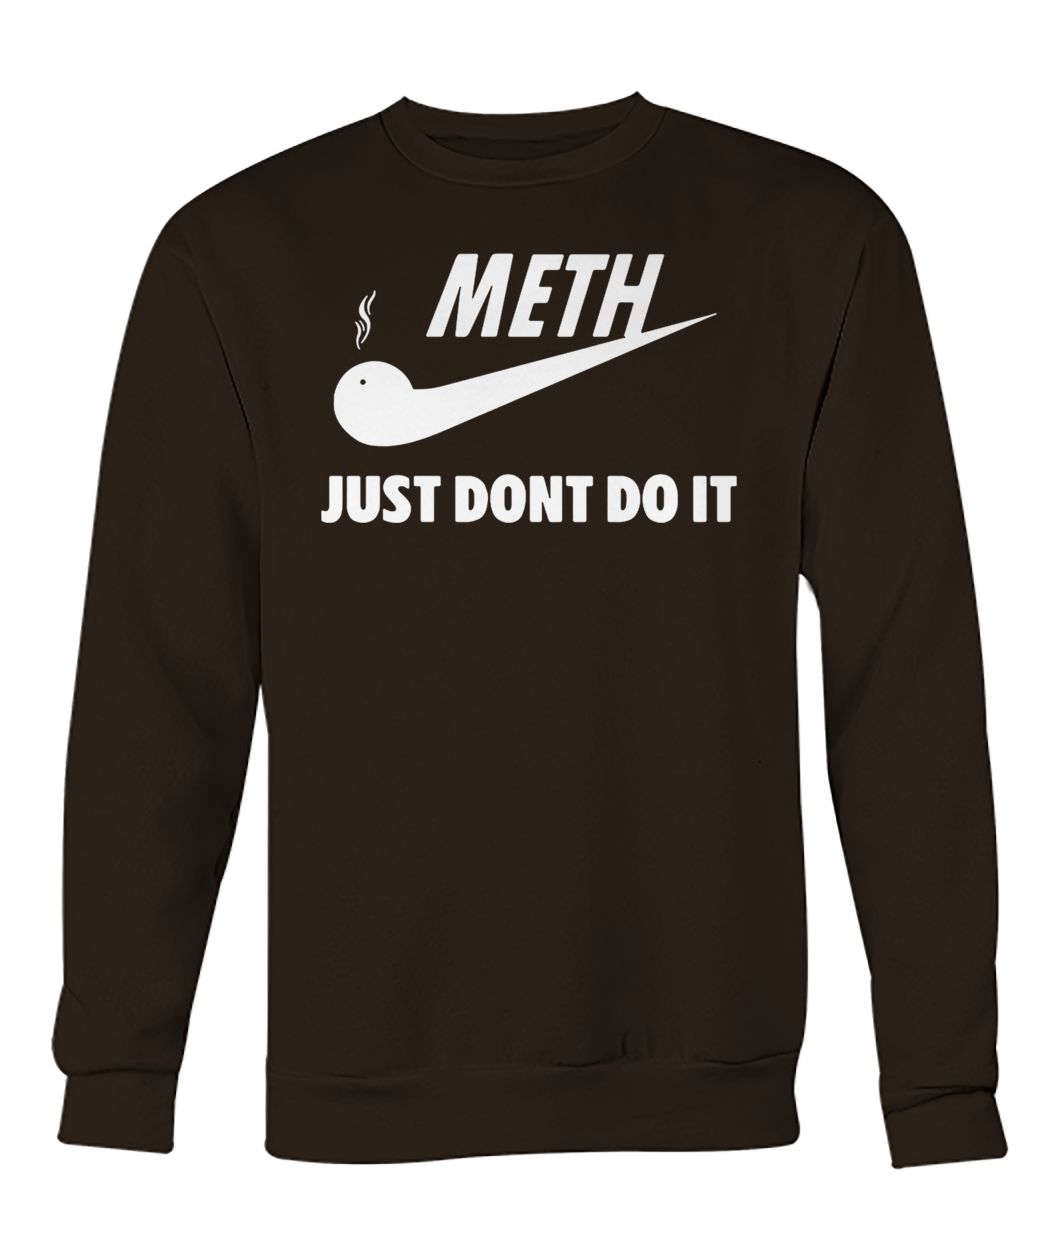 Meth just don't do it nike crew neck sweatshirt